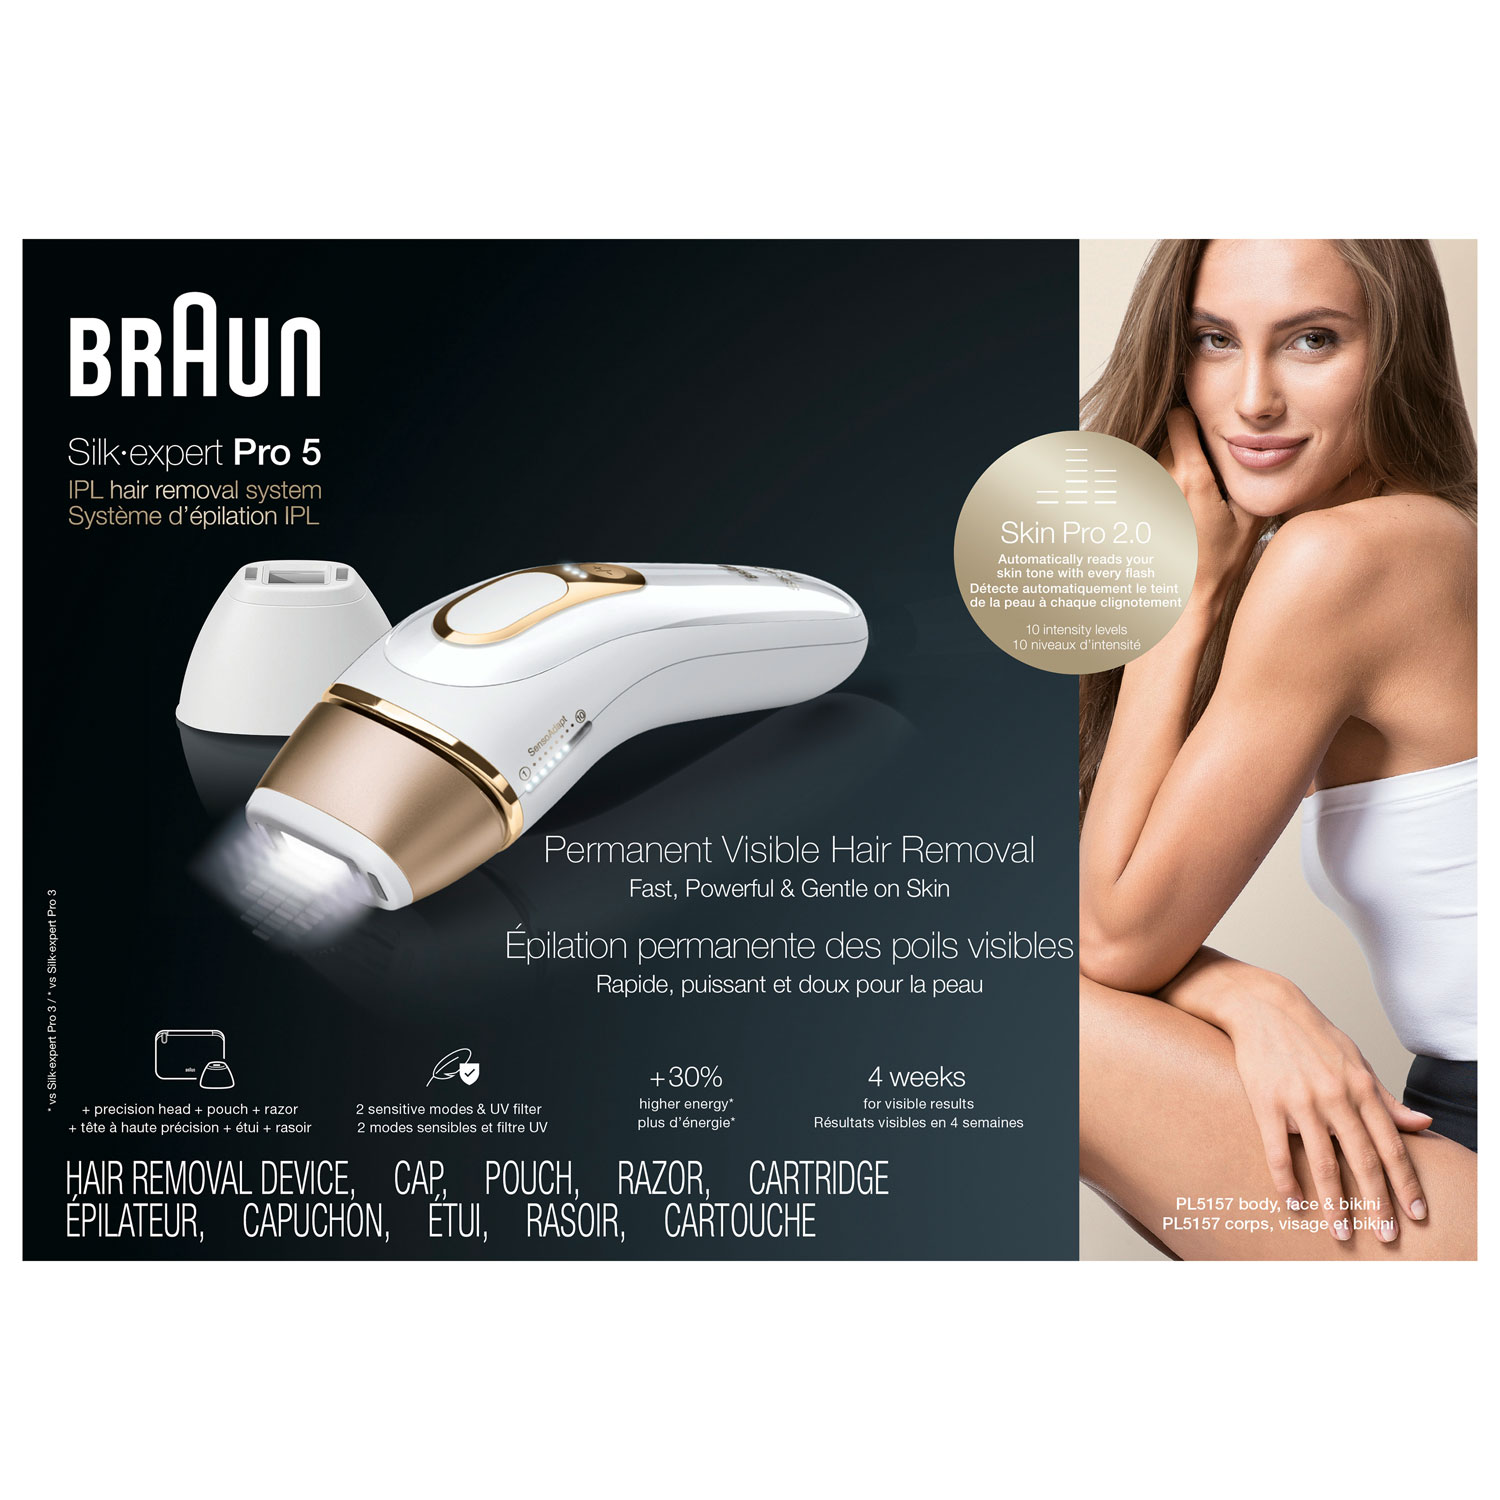 Braun Silk-expert Pro 5 IPL Hair Removal System PL5257 price in Bahrain,  Buy Braun Silk-expert Pro 5 IPL Hair Removal System PL5257 in Bahrain.